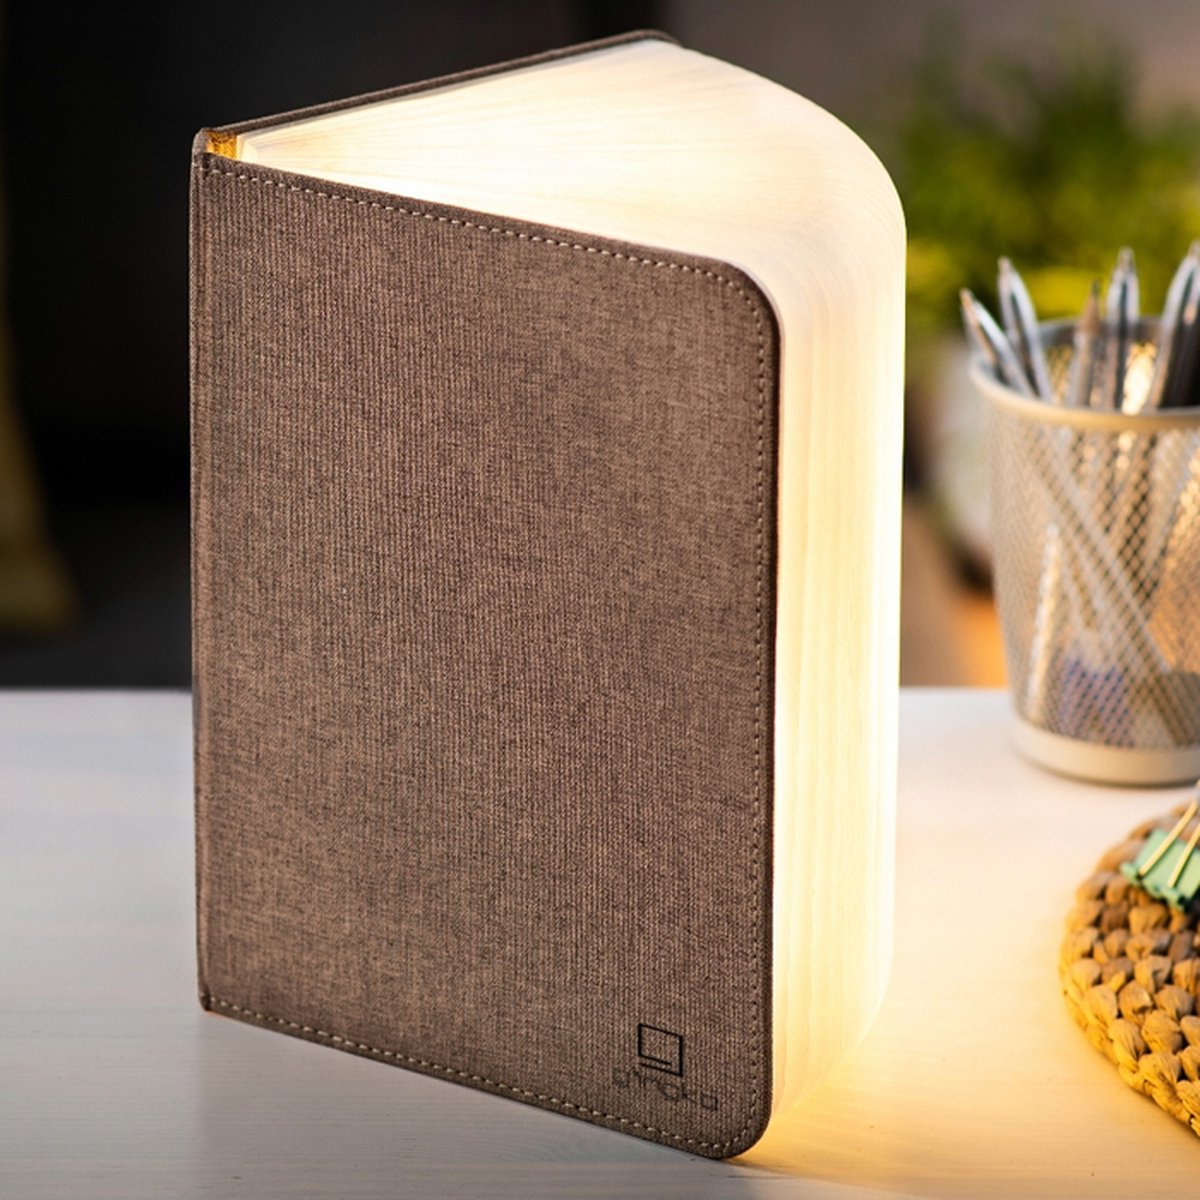 Gingko Smart Book Light - large - bruine stof